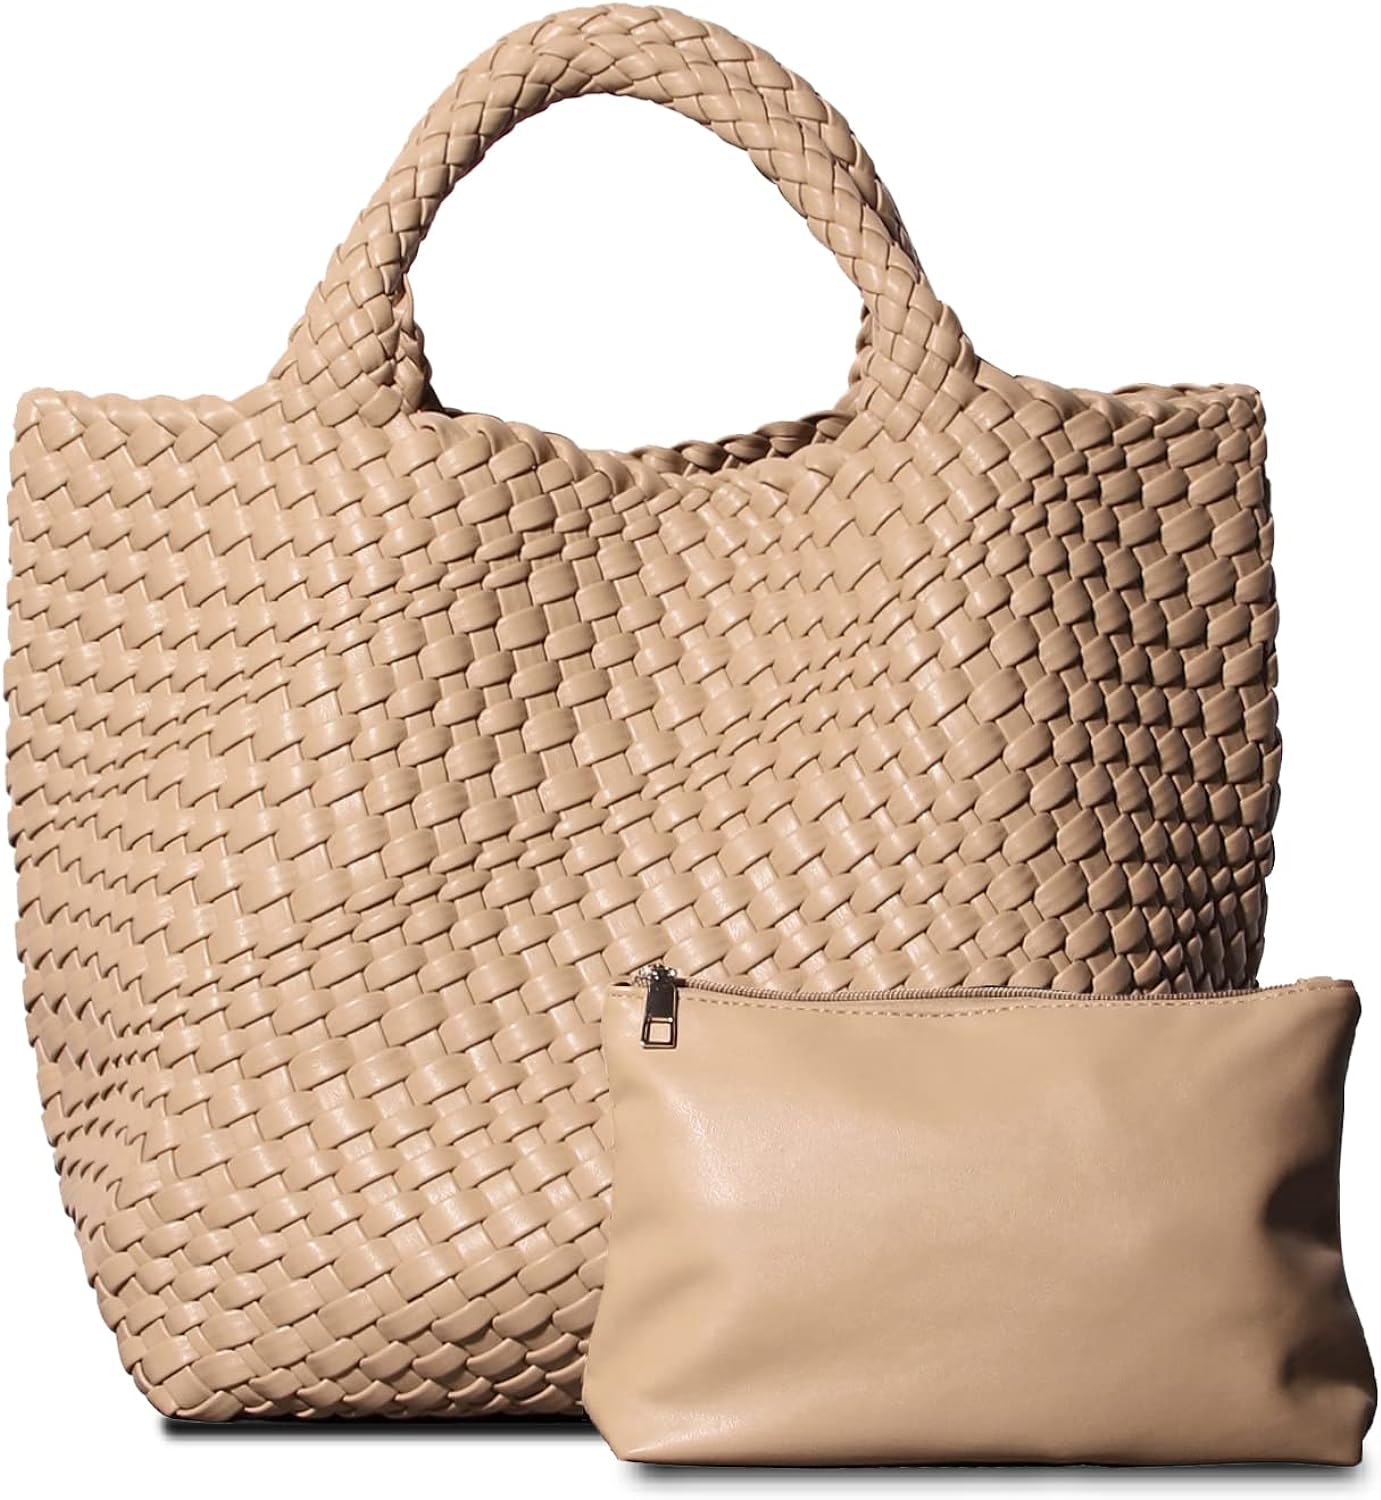 Queenoris Fashion Woven Purse for Women Top-Handle Shoulder Bag Soft Summer Hobo Tote Bag